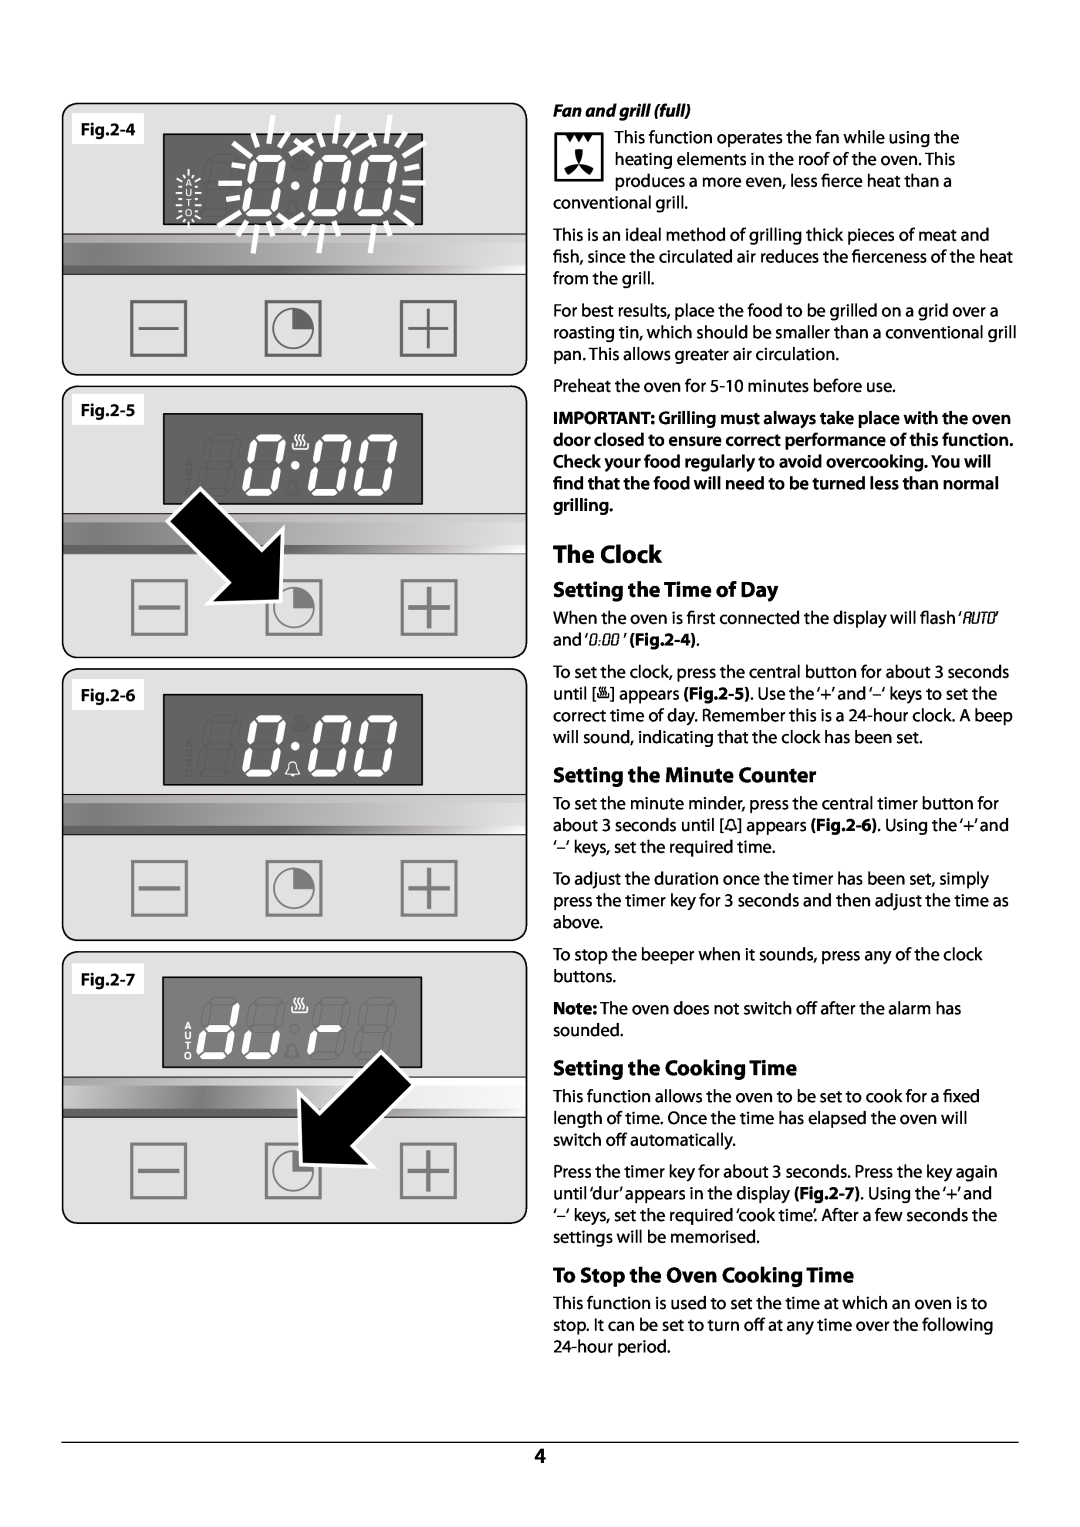 Rangemaster R7247 manual The Clock, Setting the Time of Day, Setting the Minute Counter, Setting the Cooking Time 